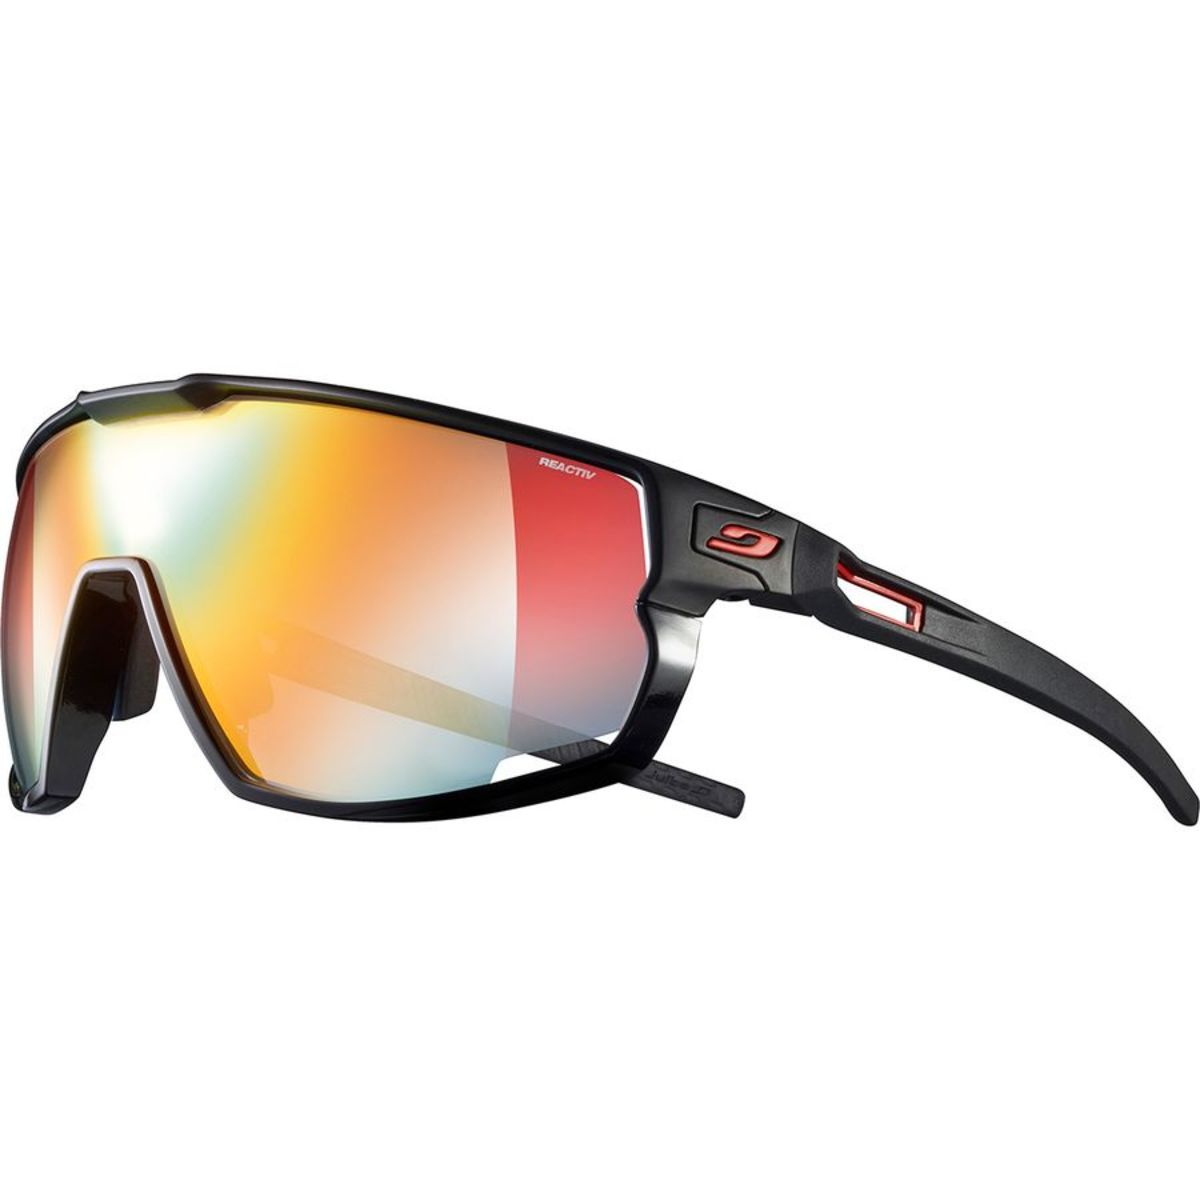 Buy PIRASO UV Protected Wrap Around Unisex Sunglasses at Amazon.in